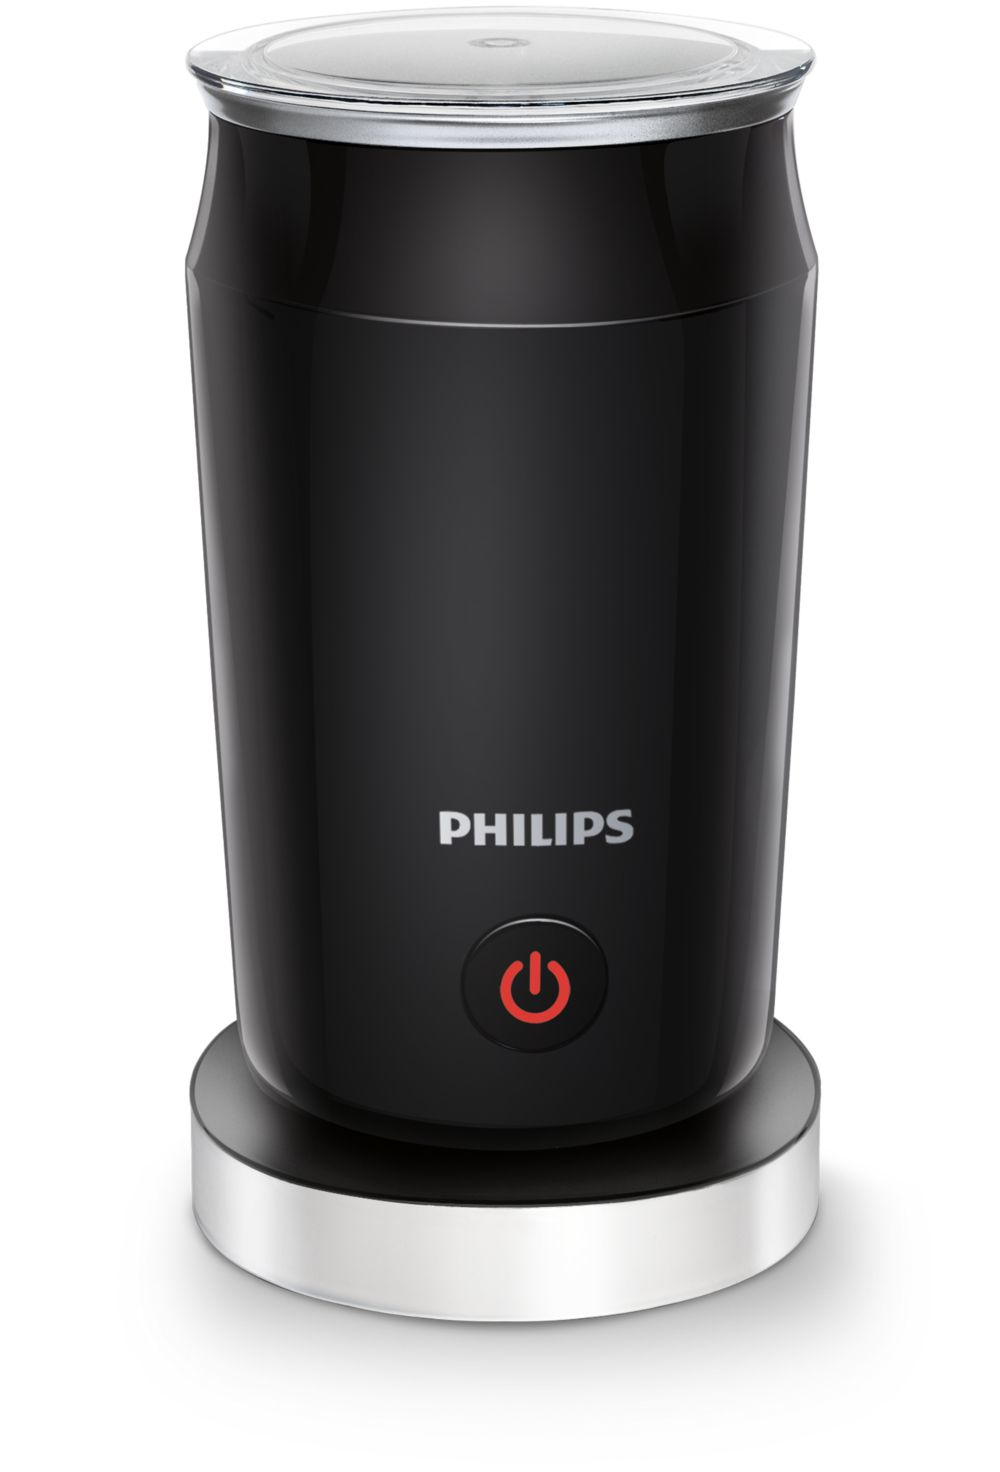 Image of Philips CA6502/65